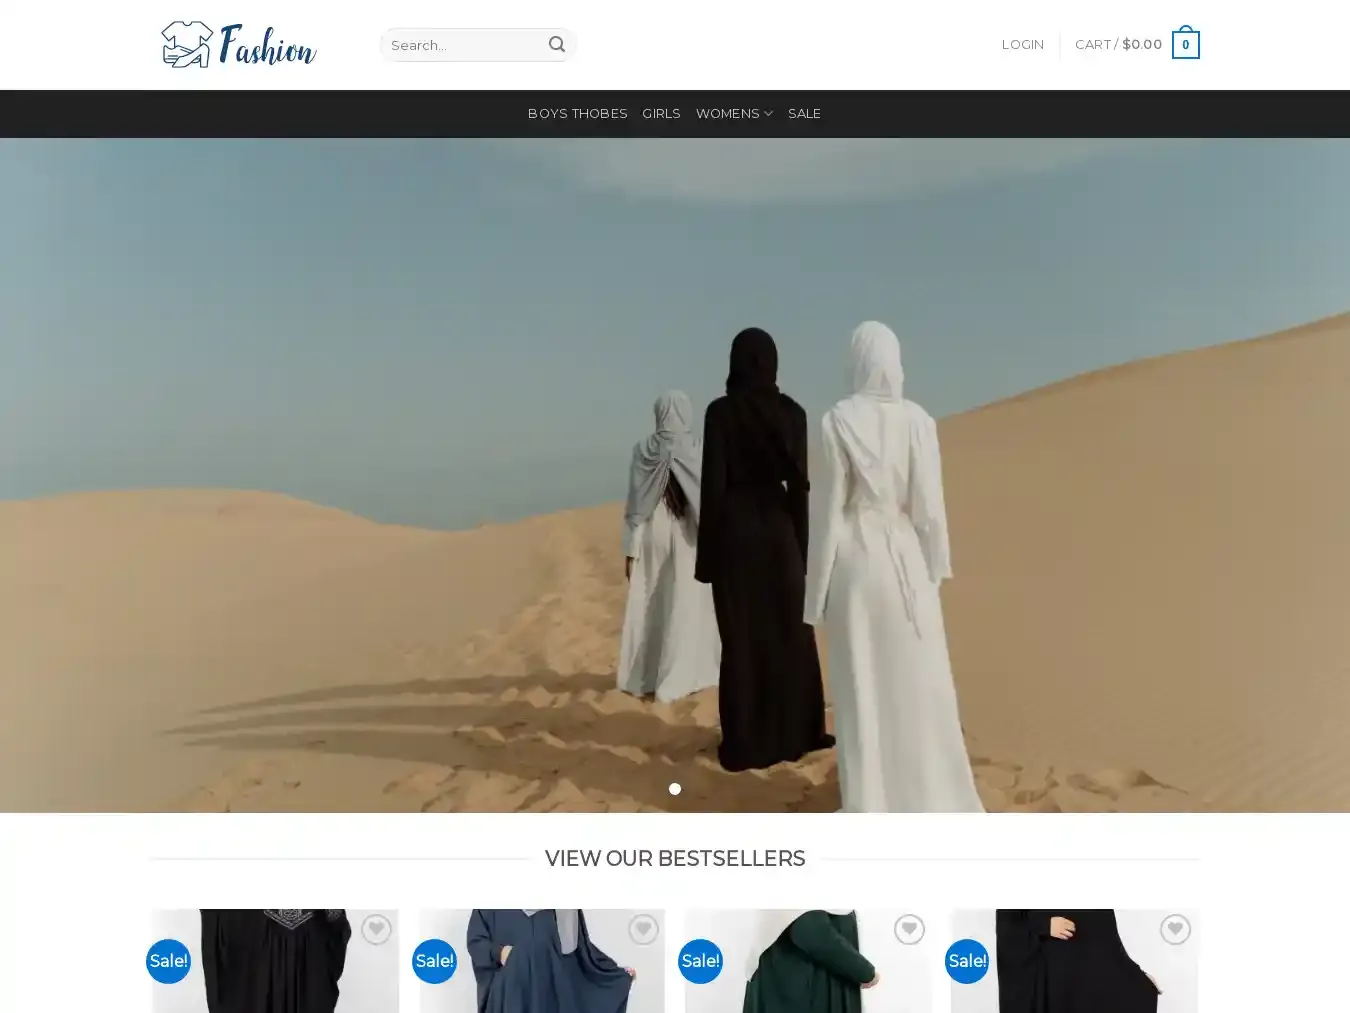 Sawfashionoff.com Fraudulent Fashion website.